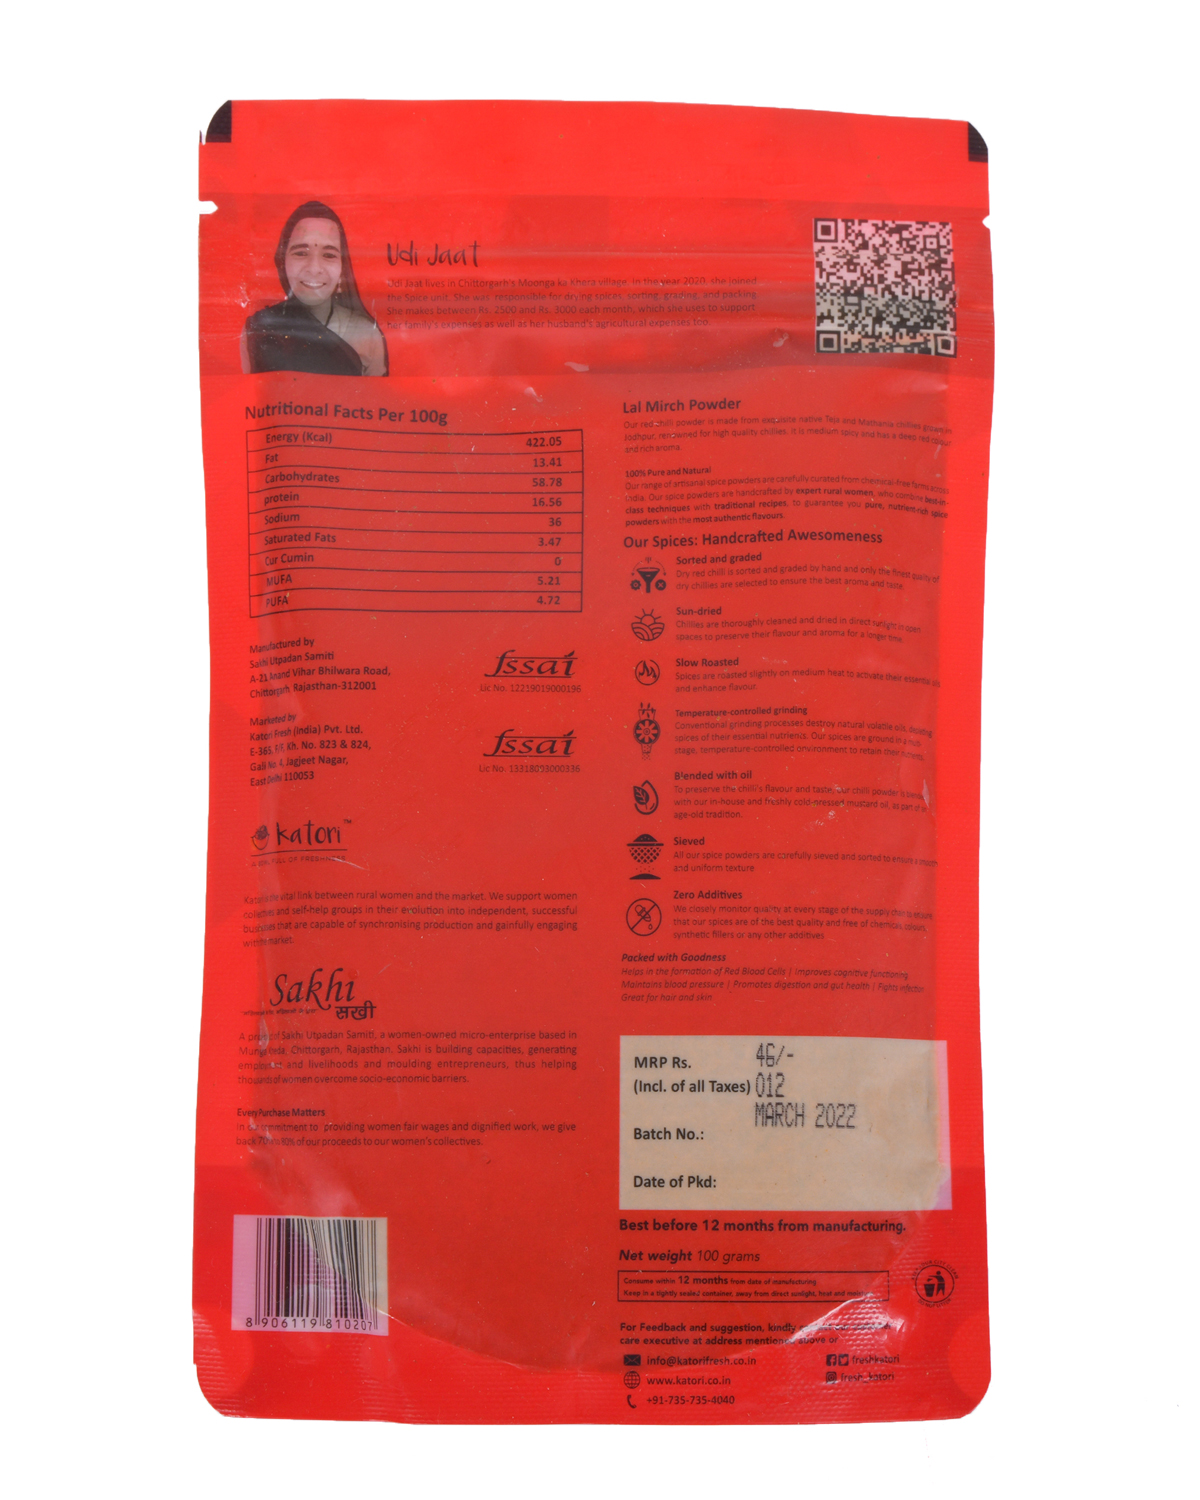 Katori- Red Chilli (Lal Mirch) Powder